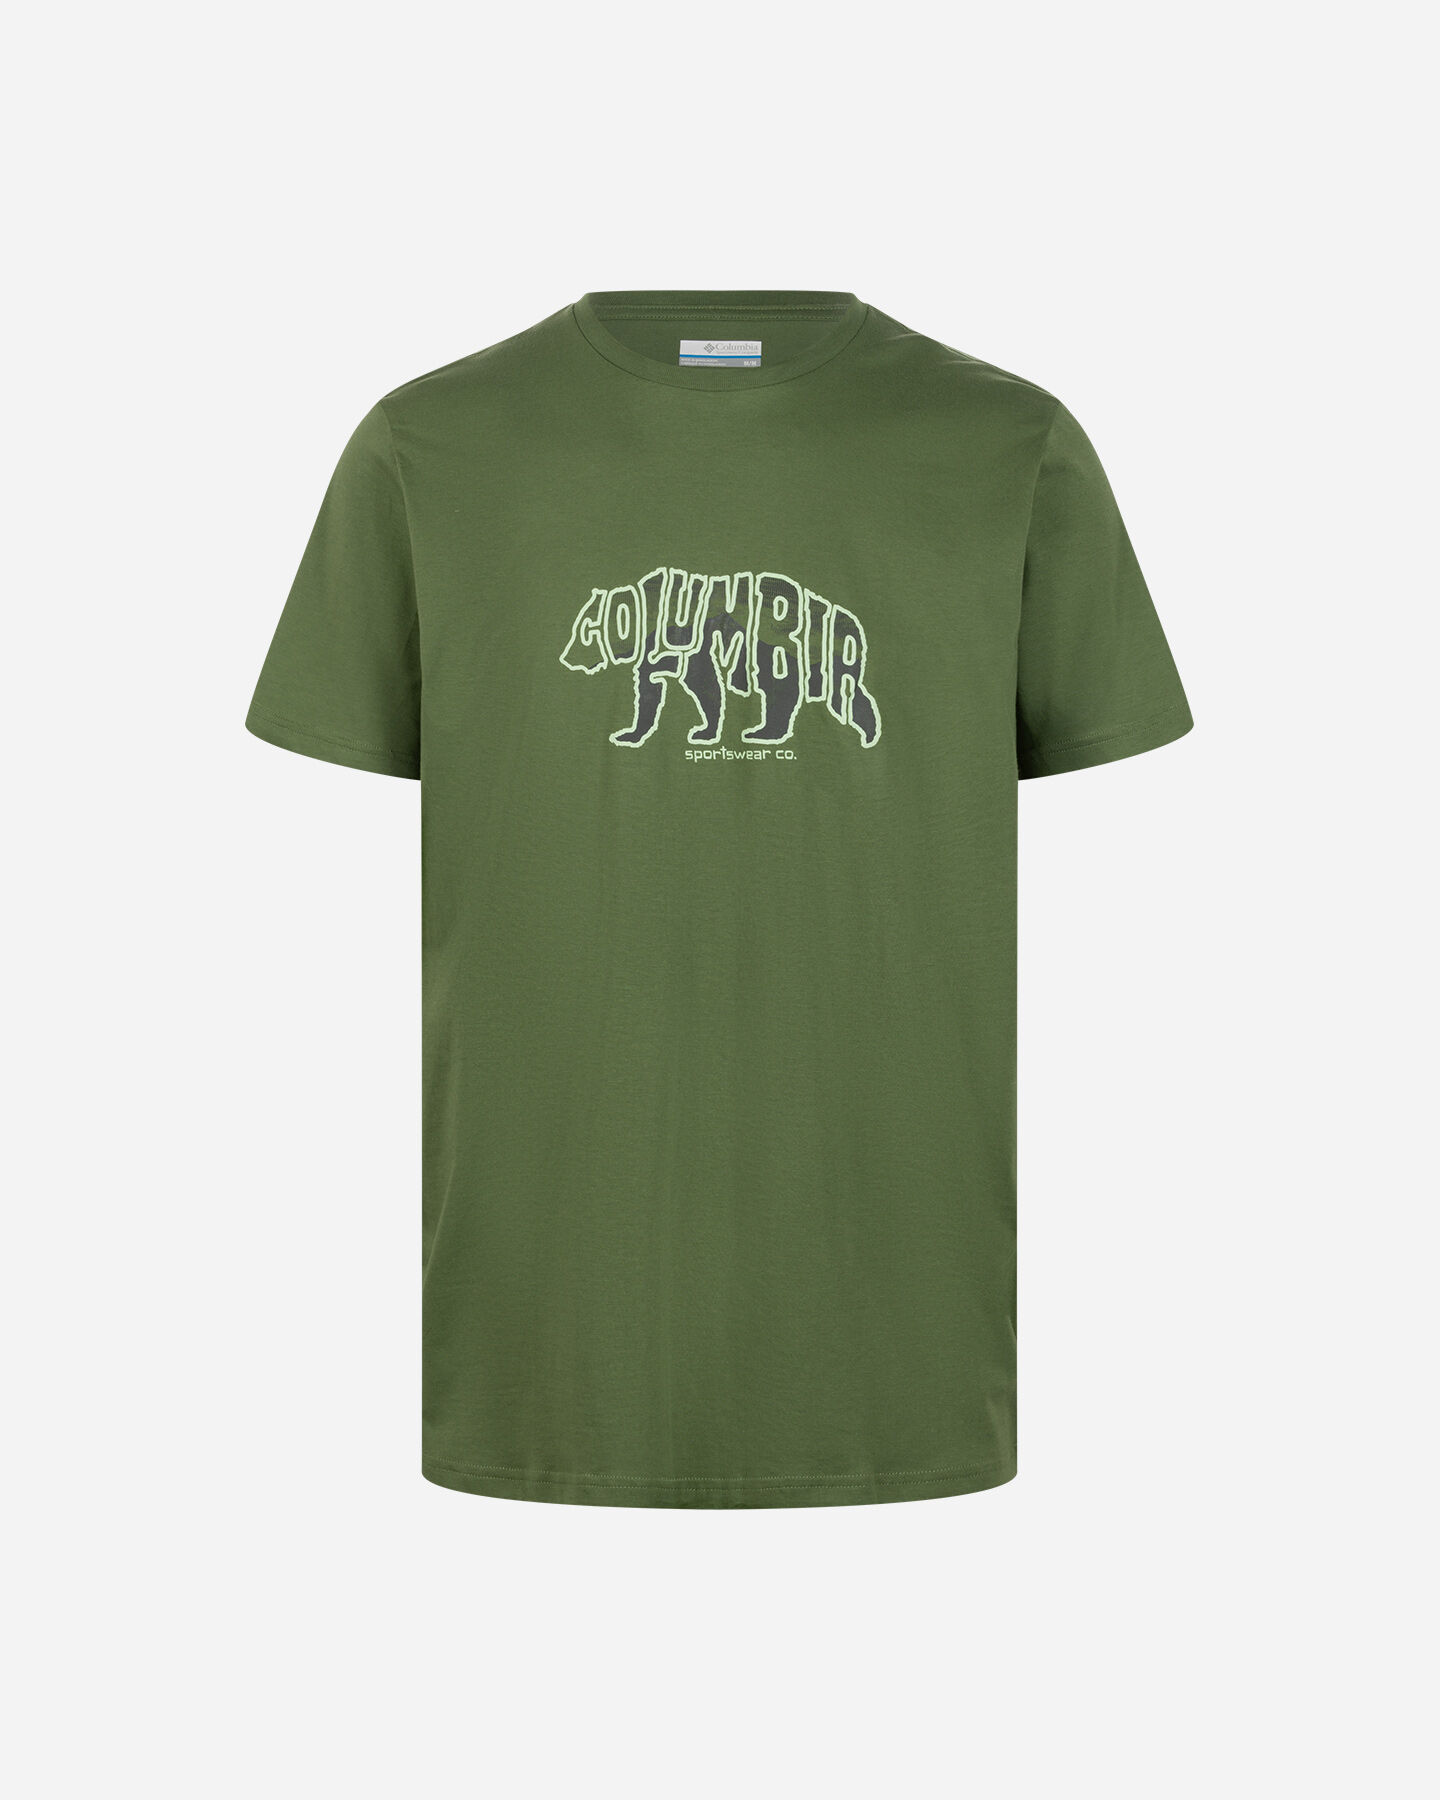  T-Shirt COLUMBIA ROCKAWAY RIVER M S5648373|352|S scatto 0